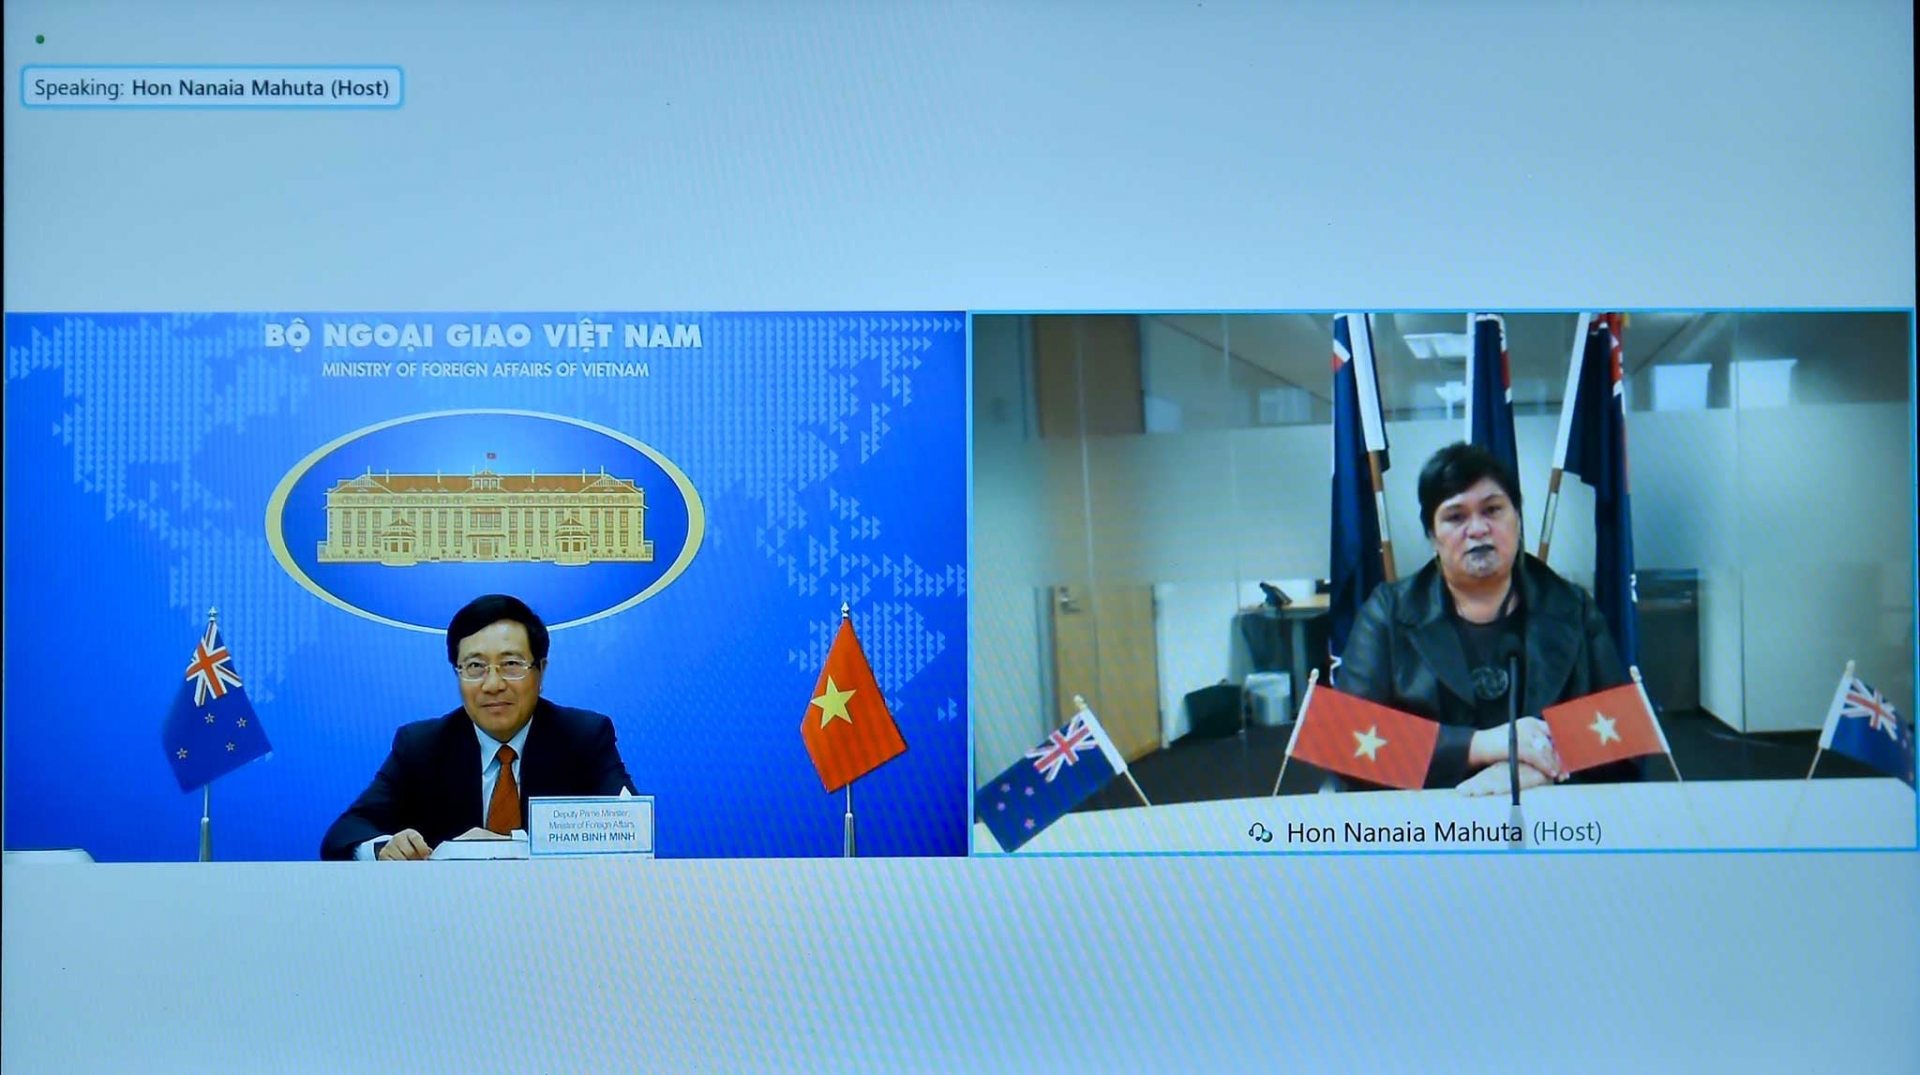 Foreign ministries seek ways to bolster cooperation between Vietnam, NZ